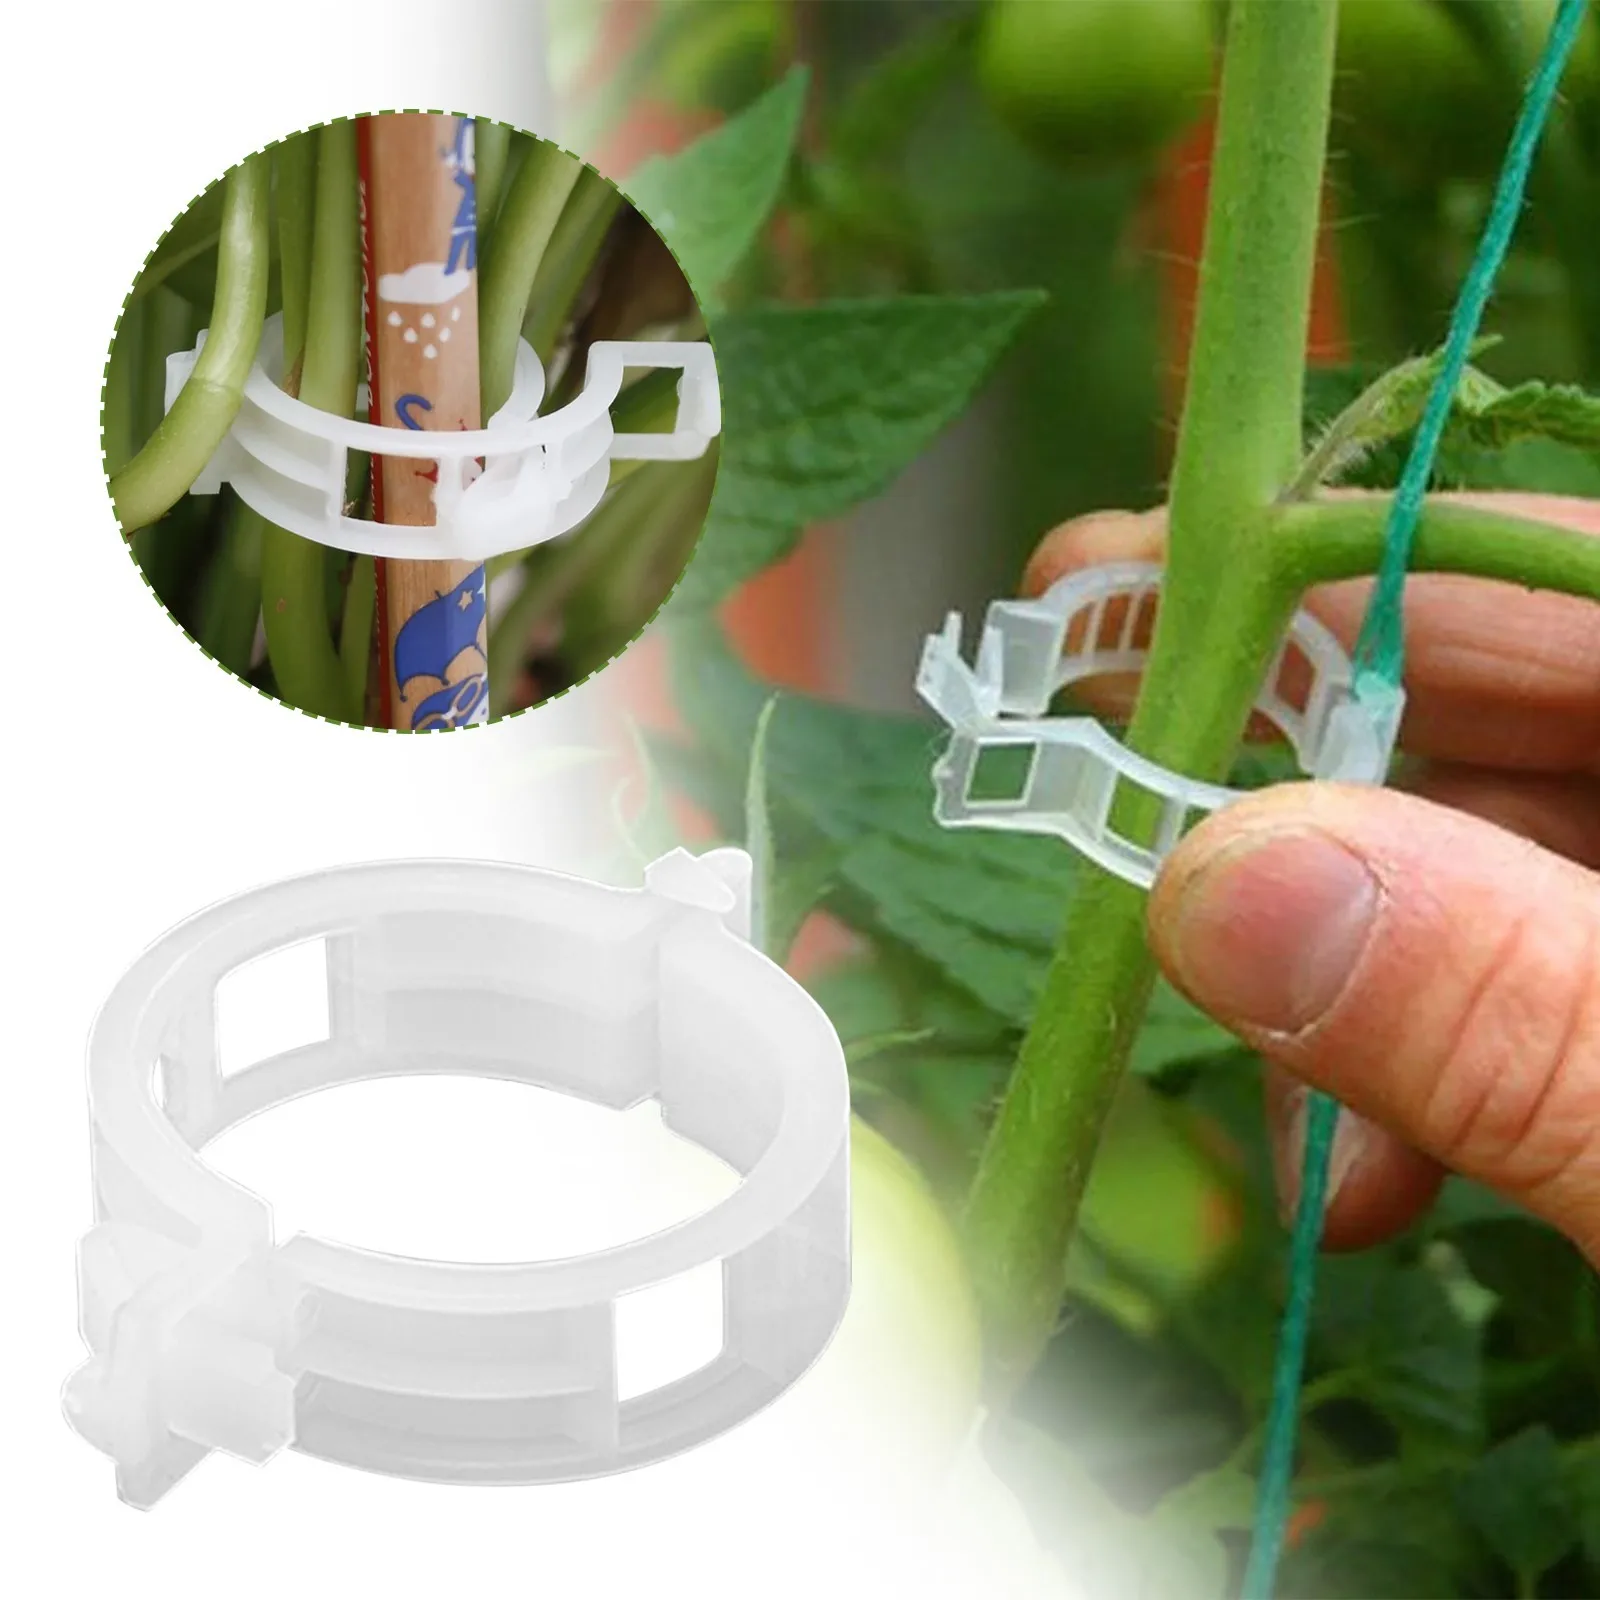 

100 Pcs Plastic Plant Support Clips For Tomato Hanging Trellis Vine Connects Plants Greenhouse Vegetables Garden Ornament